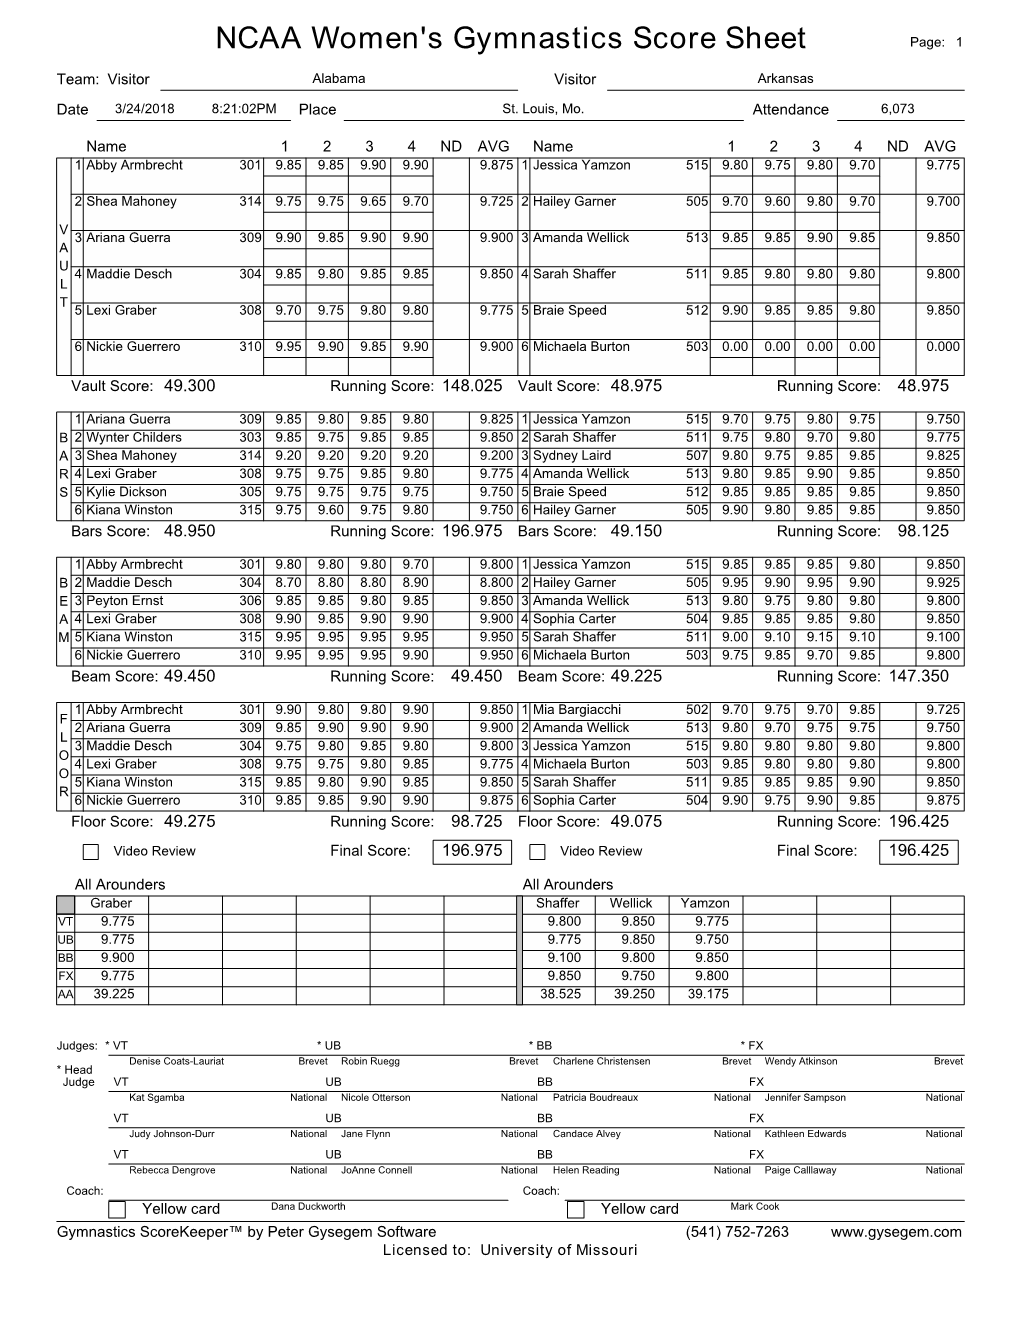 Women's Score Sheet 03-24-2018